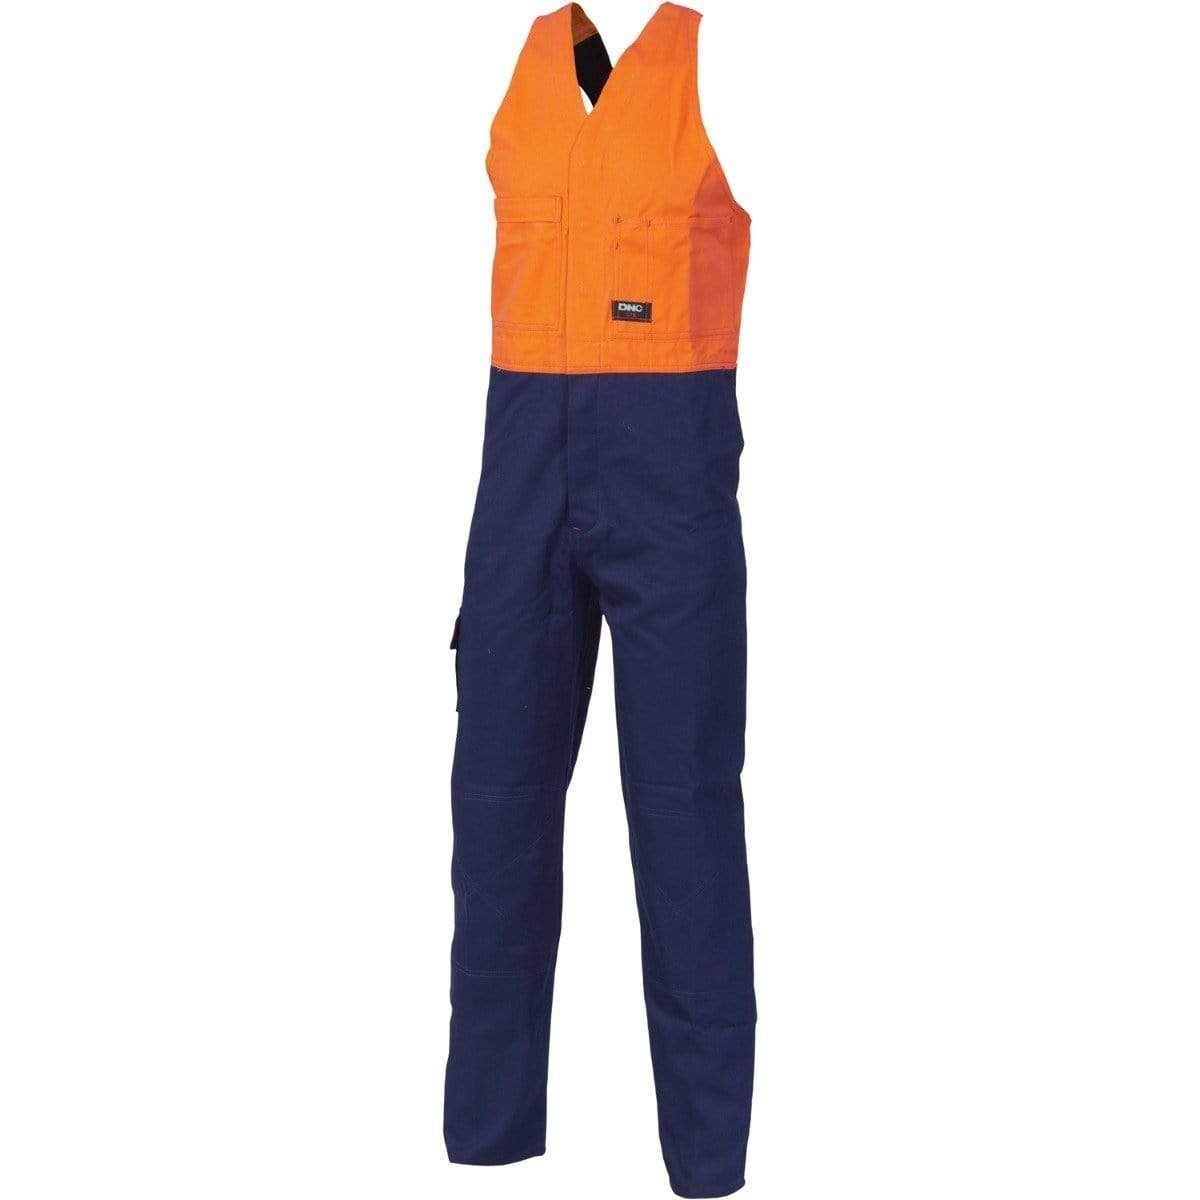 Dnc Workwear Hi-vis Two-tone Cotton Action Back Overall - 3853 Work Wear DNC Workwear Orange/Navy 77R 